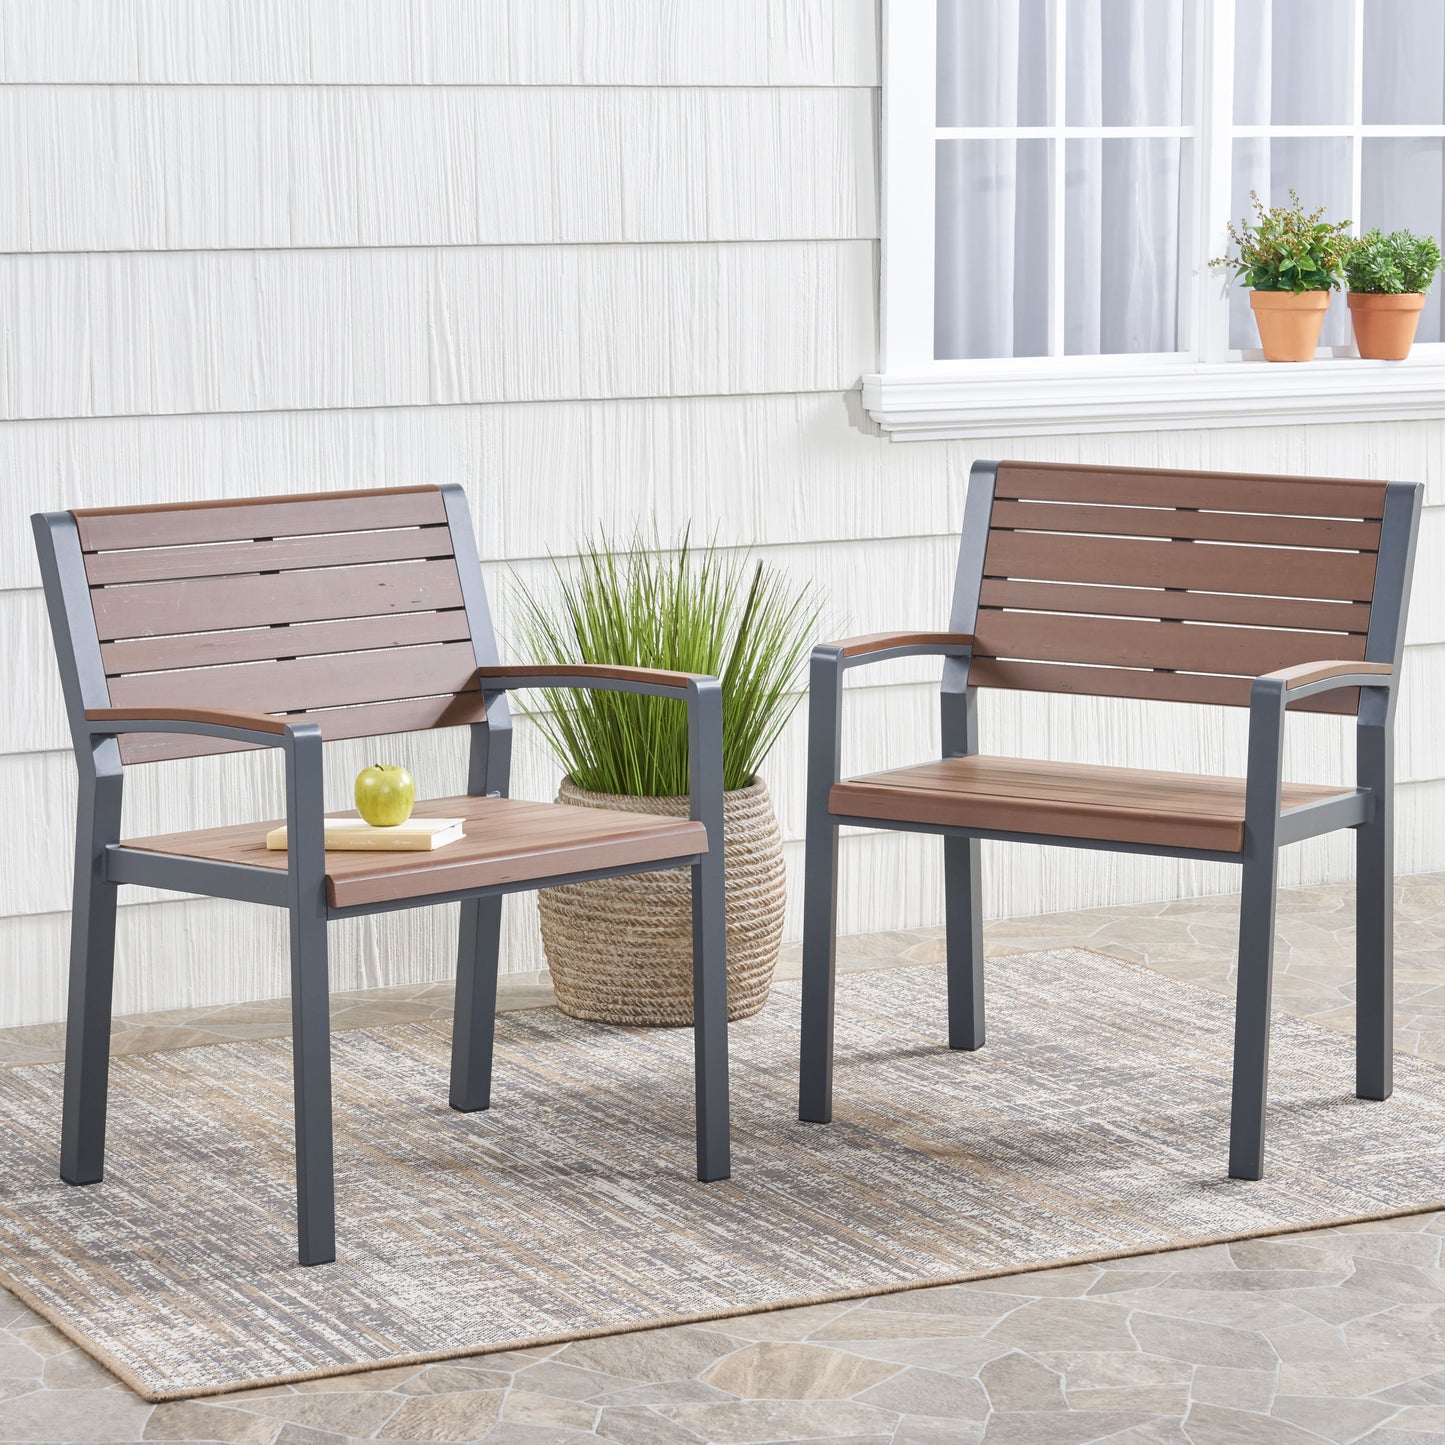 Trimble Outdoor Aluminum Chairs, Set of 2